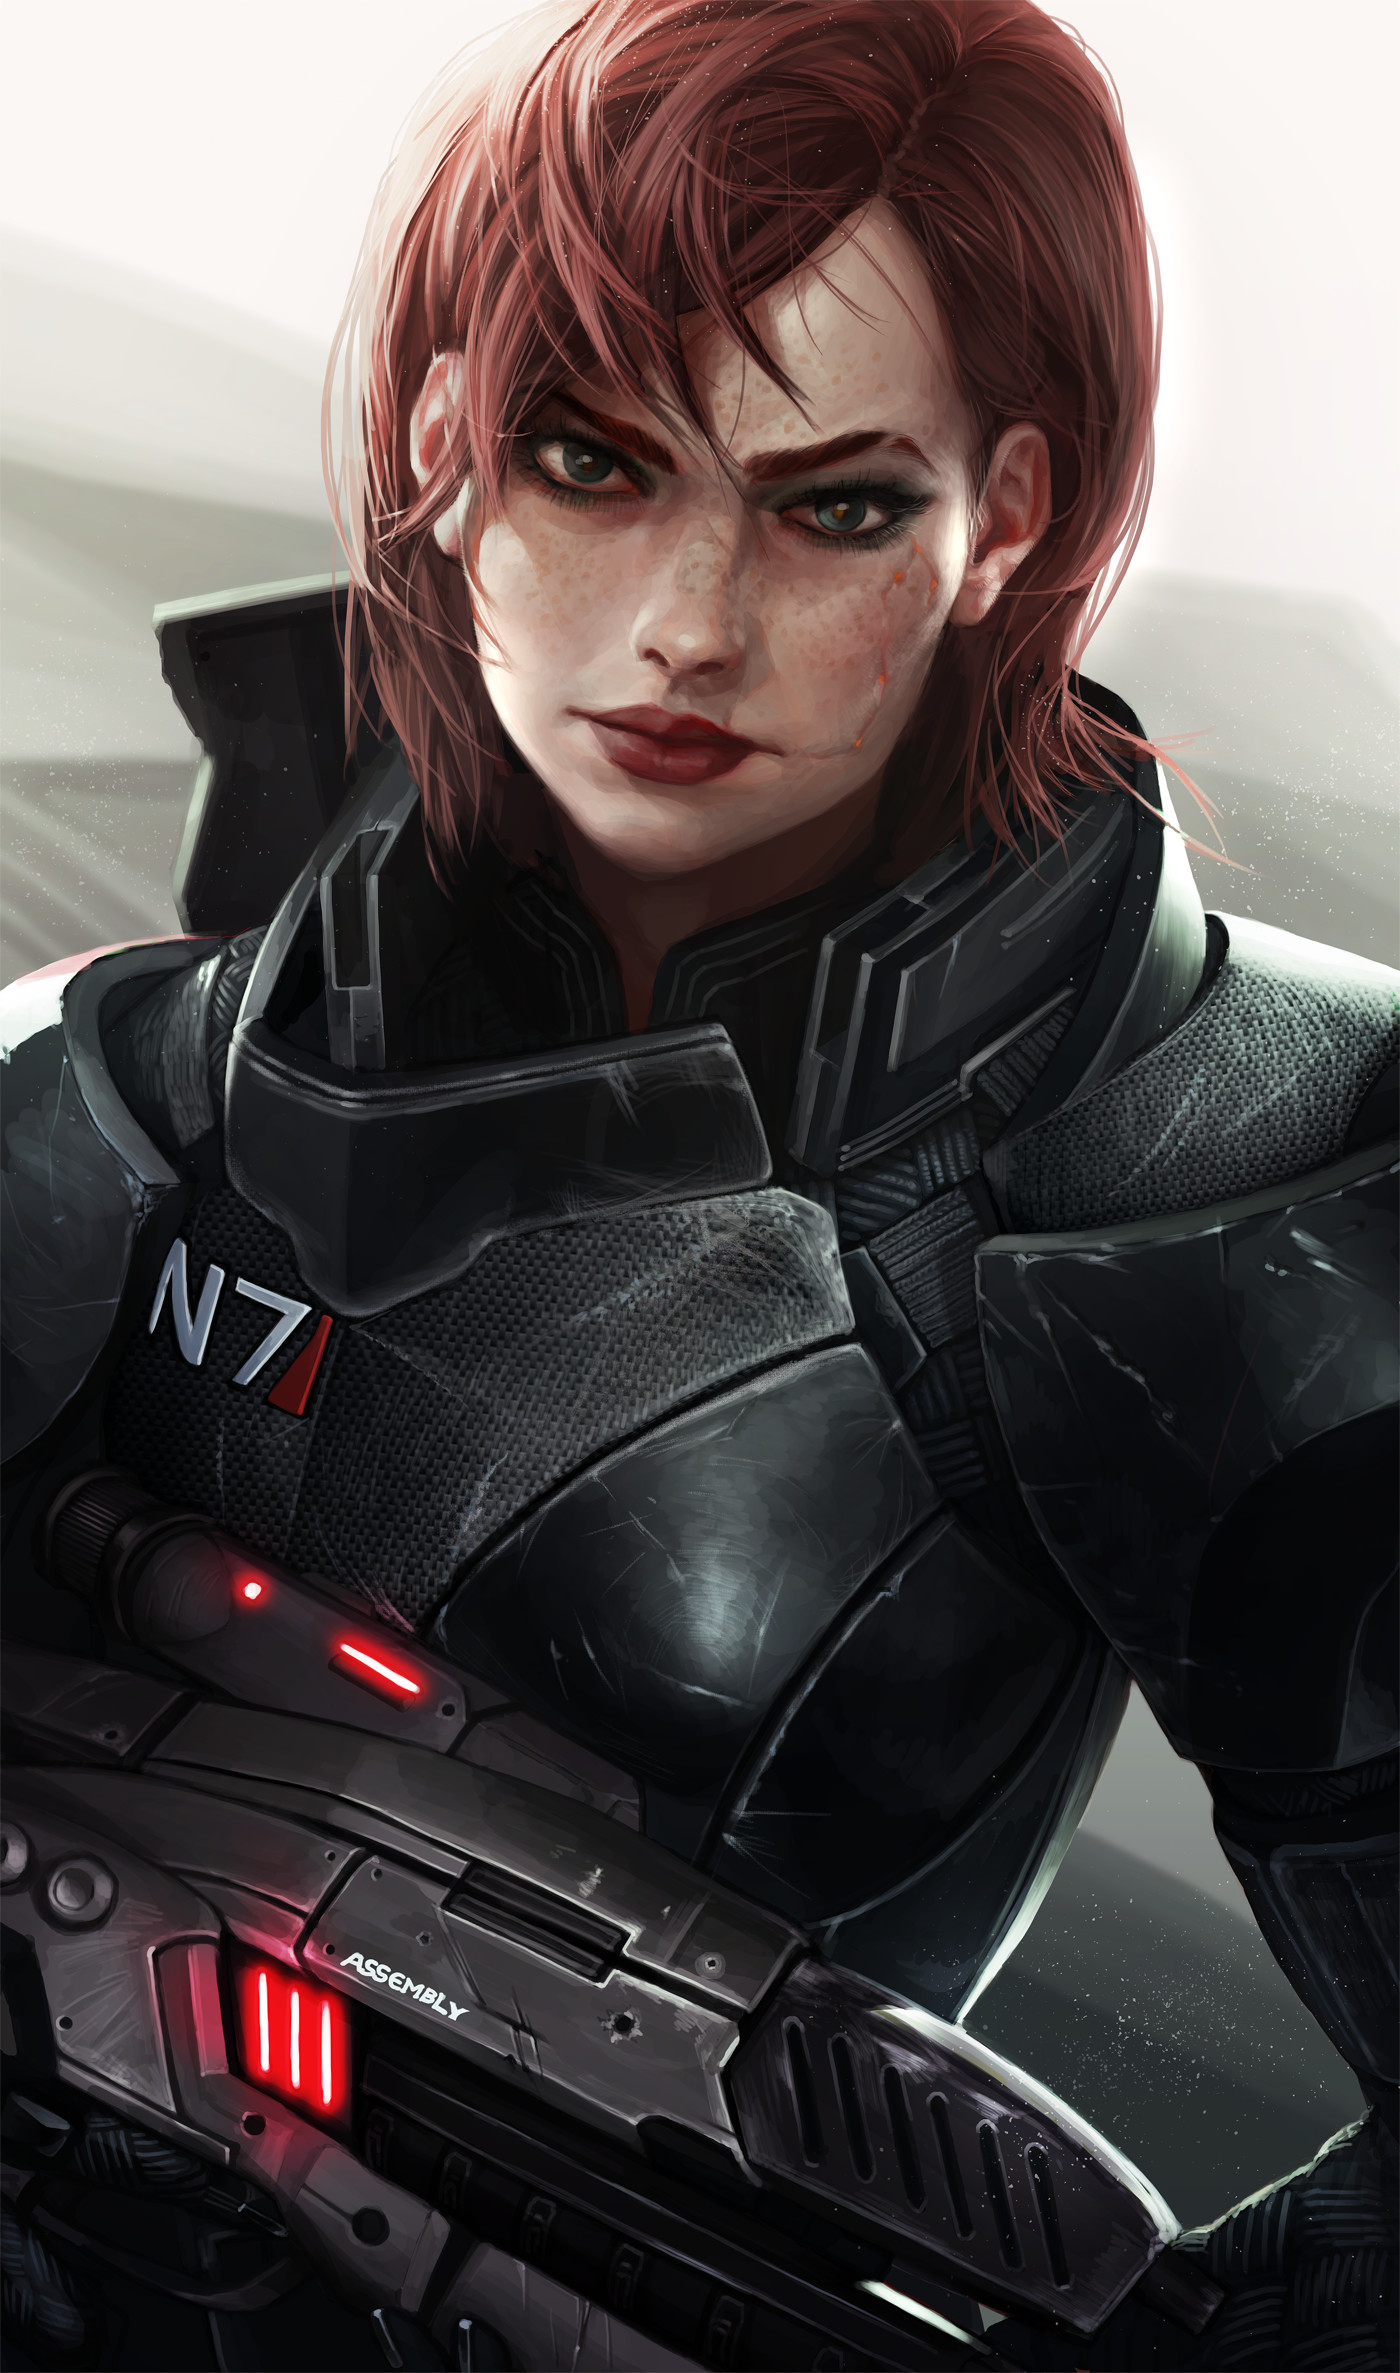 Warrior Futuristic Gun Mass Effect Girls With Guns Science Fiction Video Games Commander Shepard Jan 1400x2373